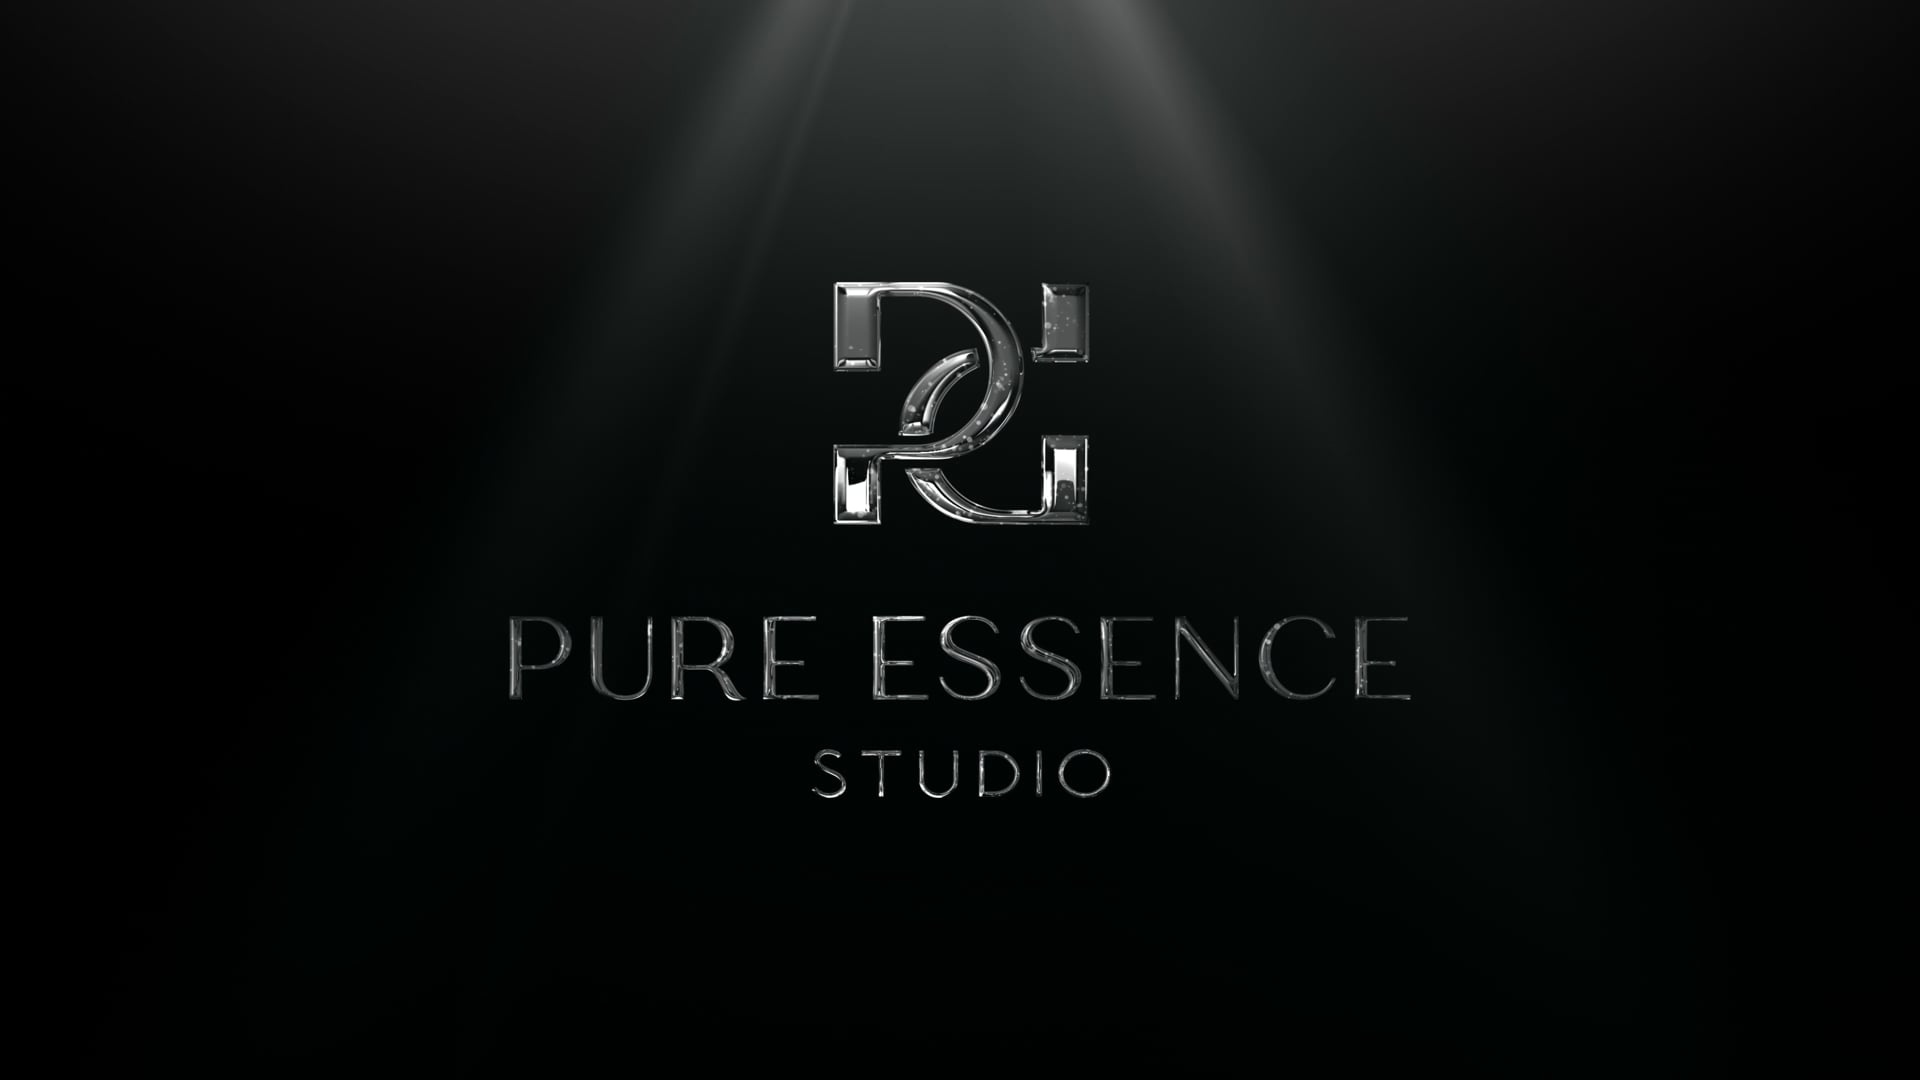 Pure Essence Center for Wellness and Aesthetics